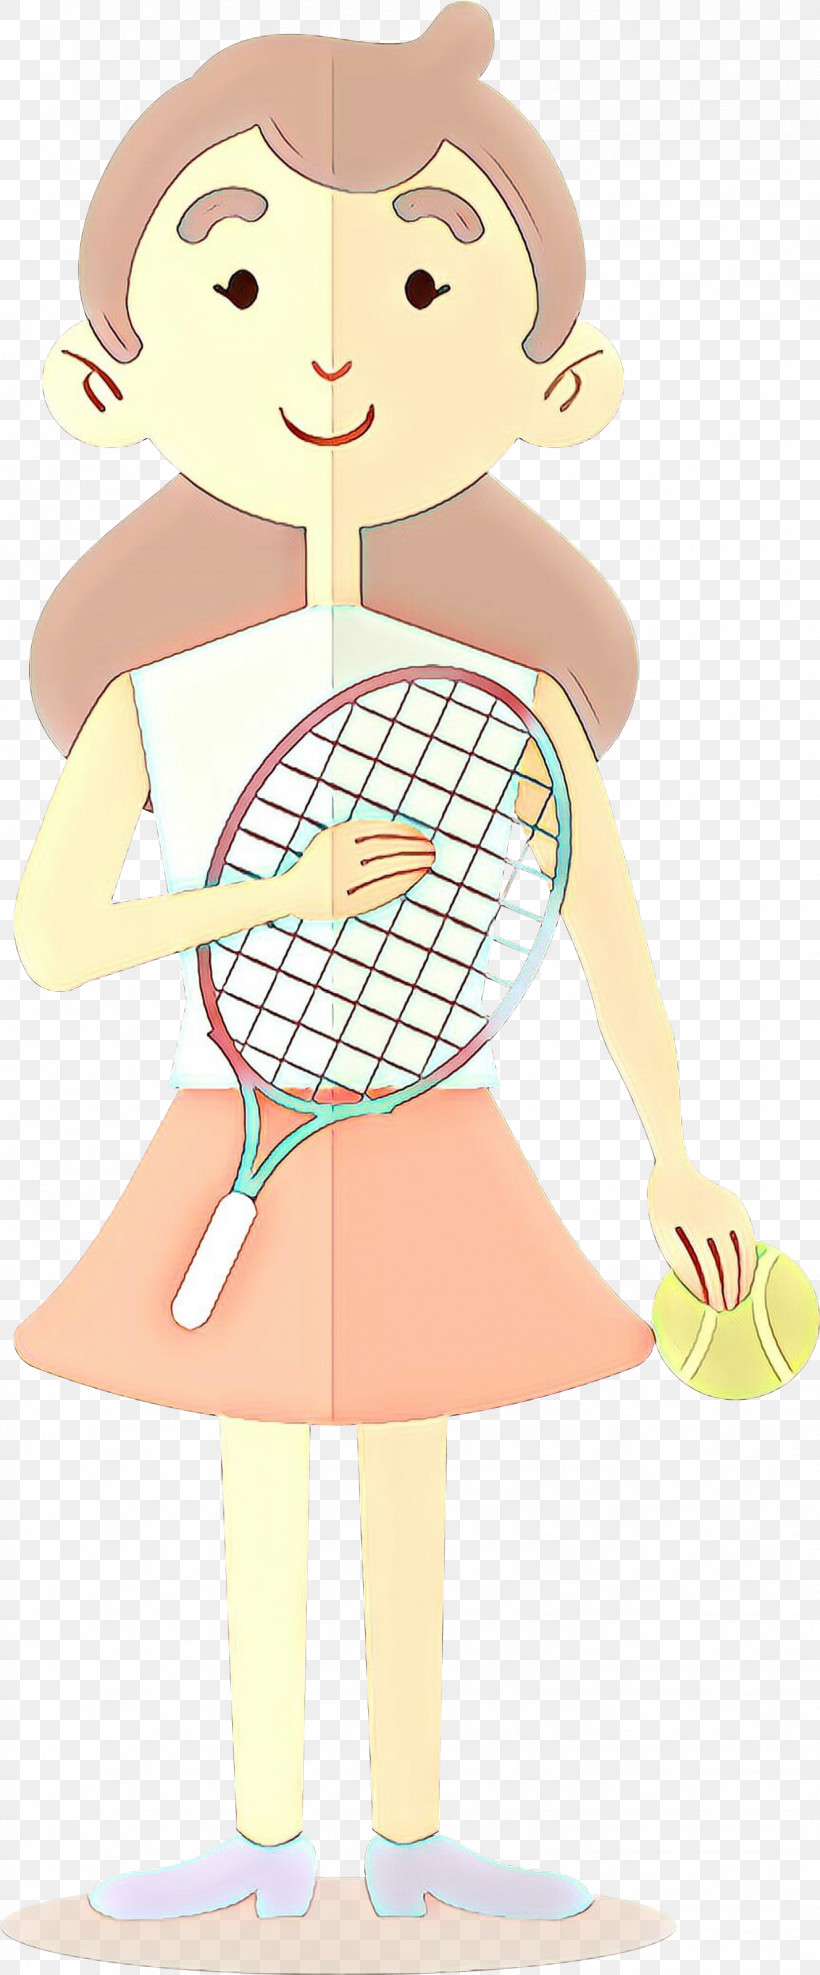 Tennis Racket Racket Cartoon Tennis Tennis Player, PNG, 1328x3200px, Tennis Racket, Cartoon, Racket, Racquet Sport, Tennis Download Free